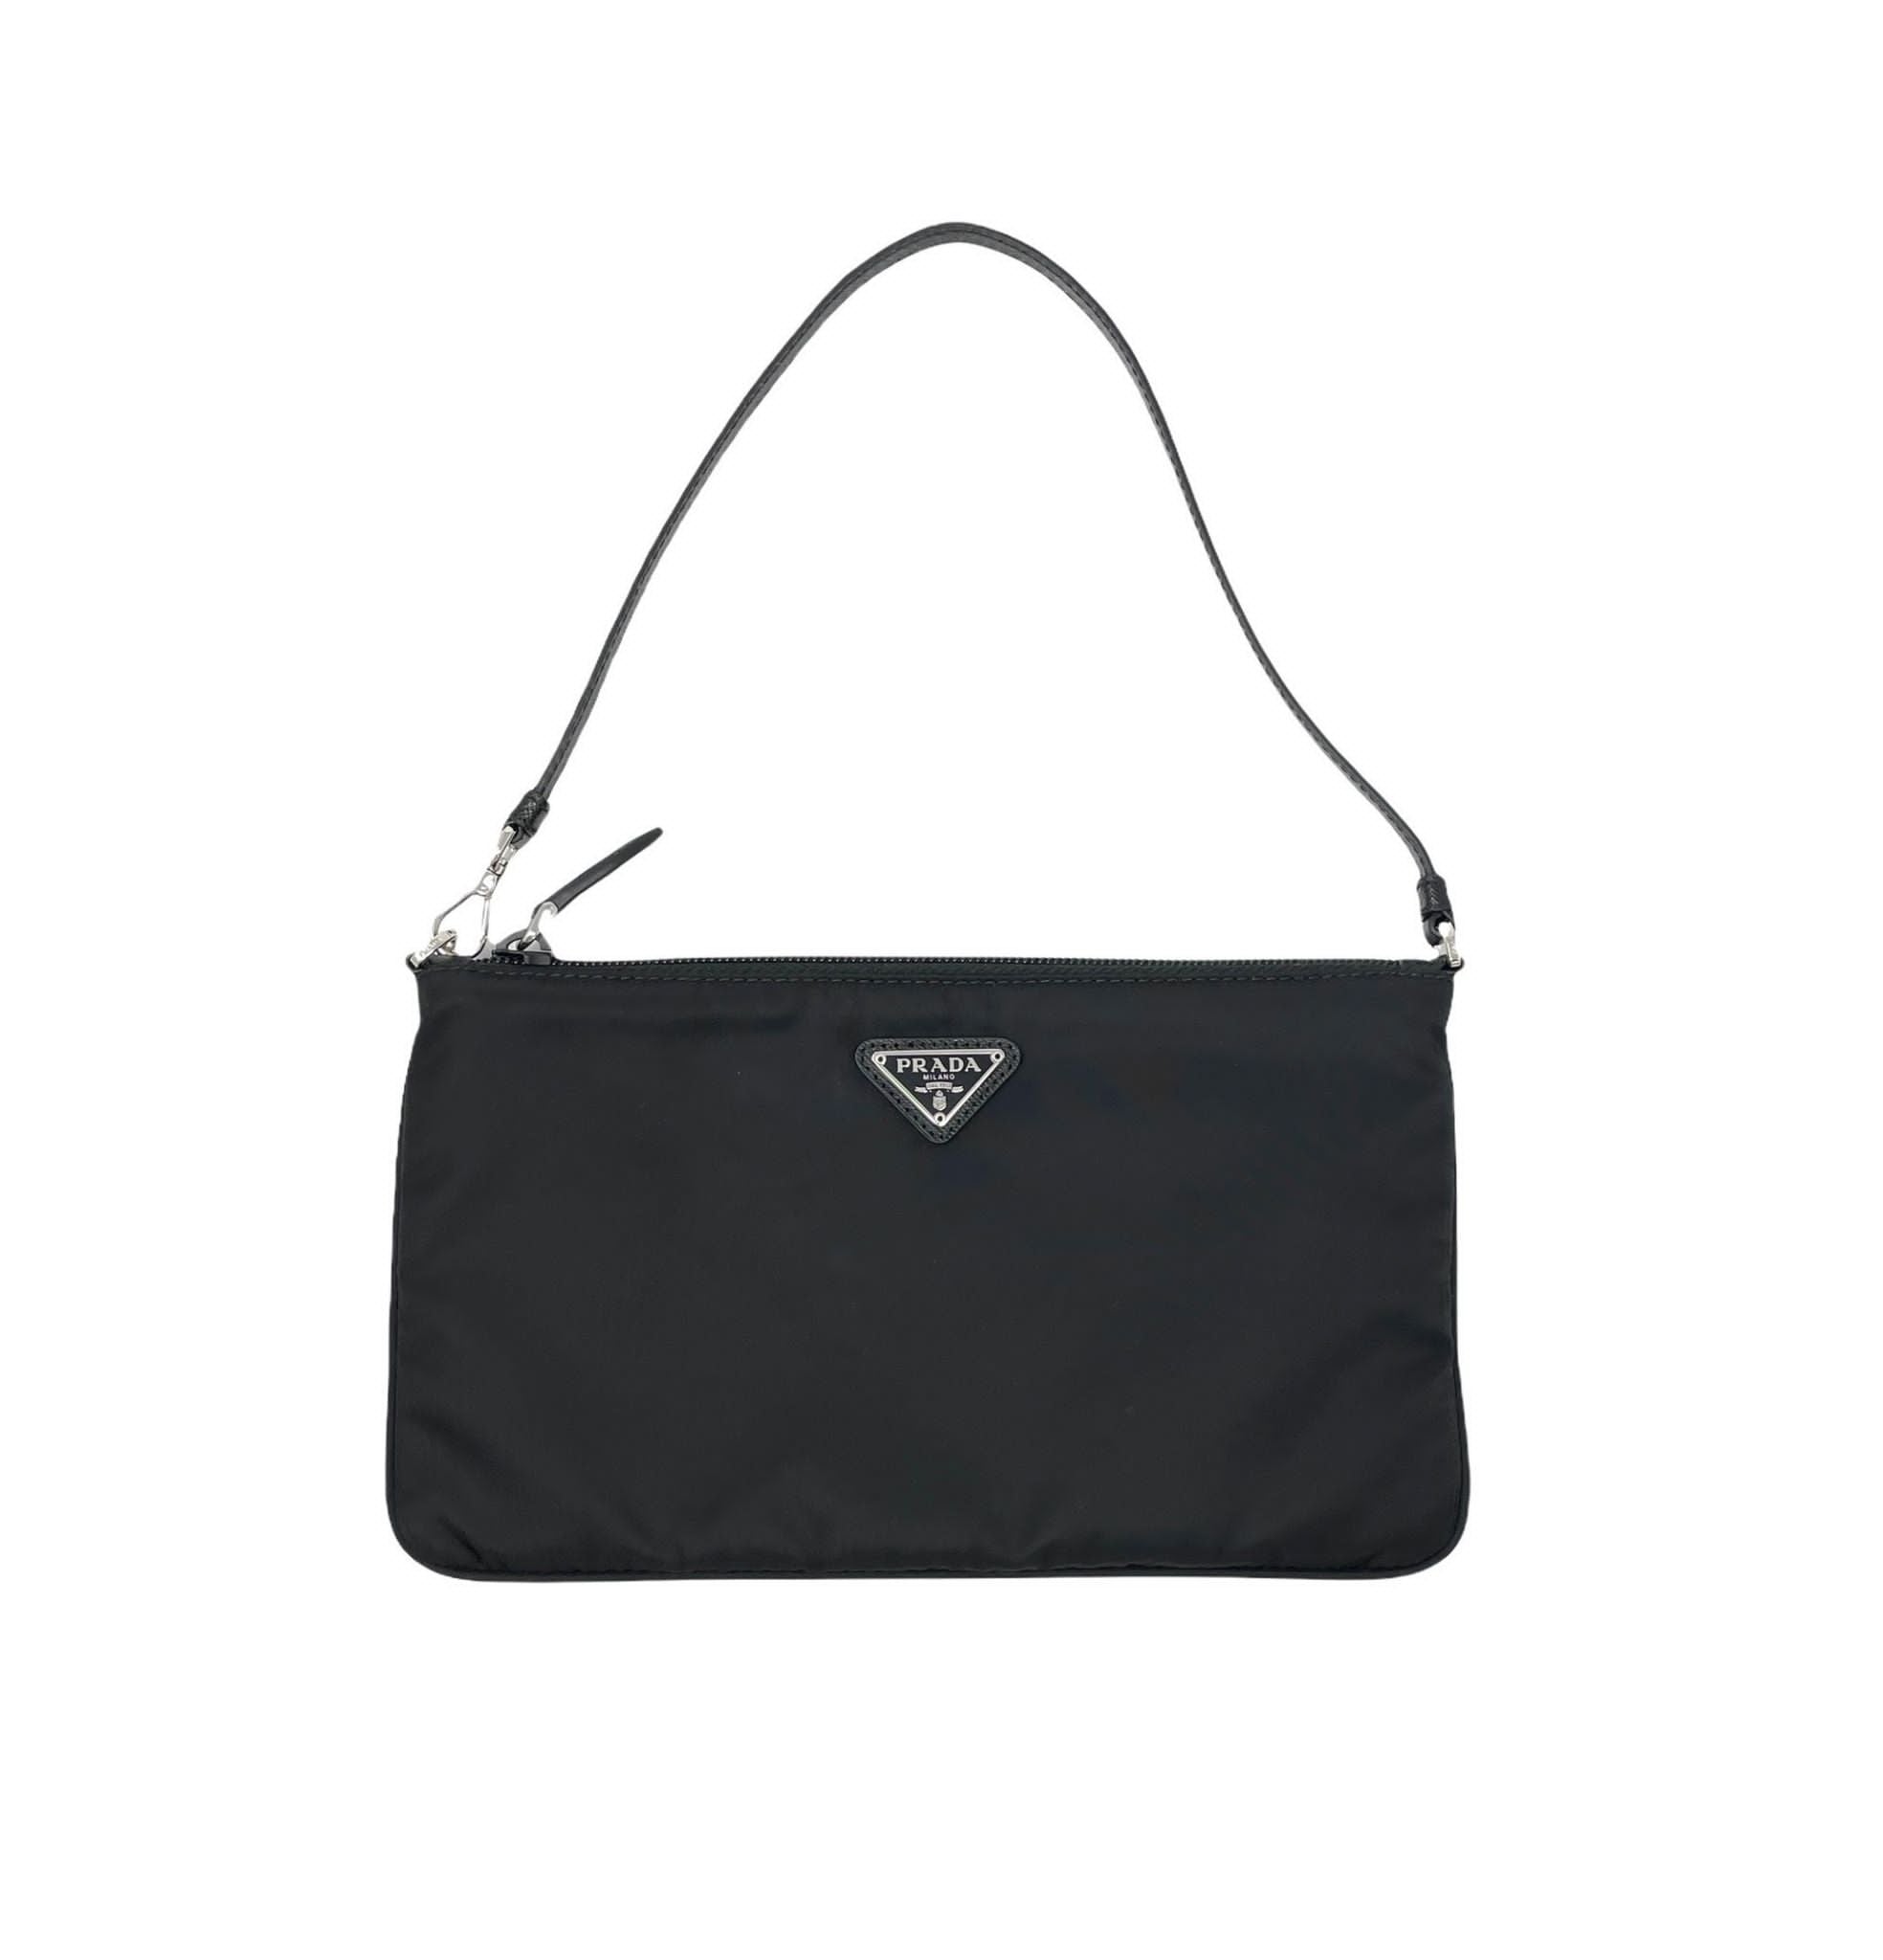 Prada Black Nylon Mini Shoulder Bag - Handbags